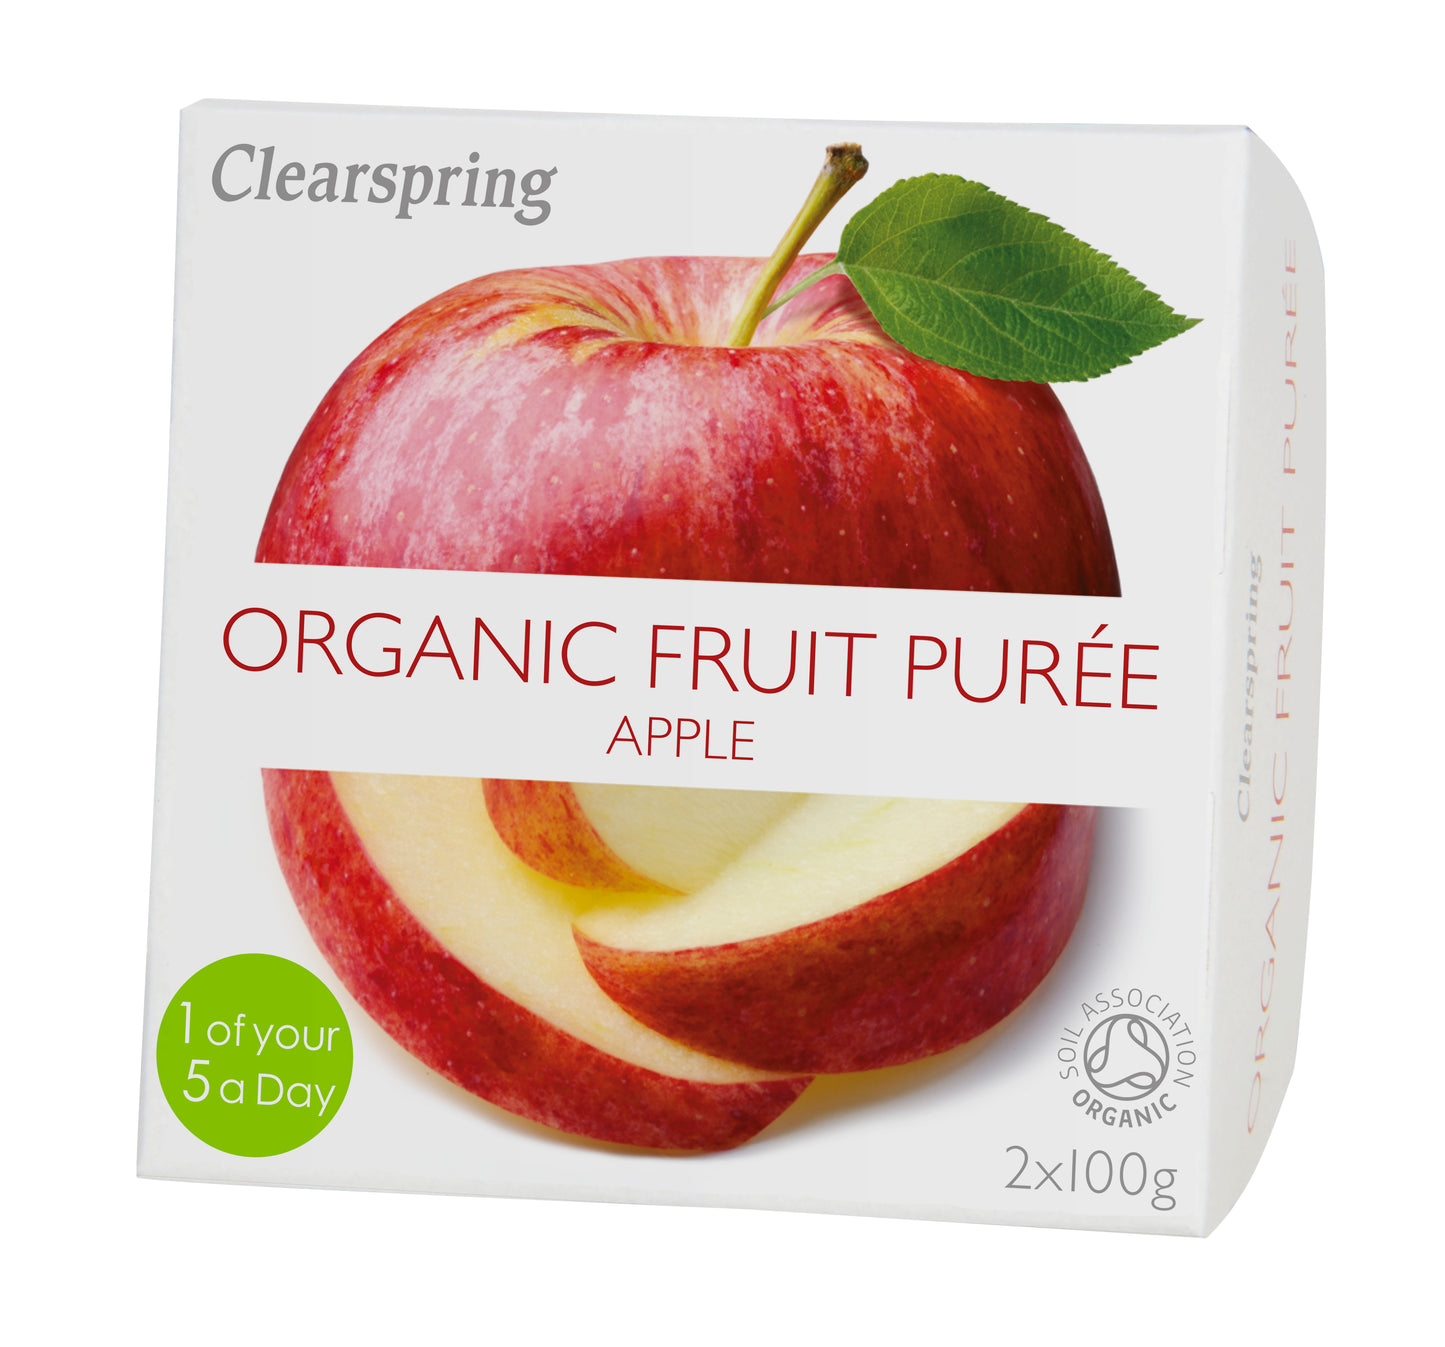 Organic Fruit Purée - Apple (2x100g)